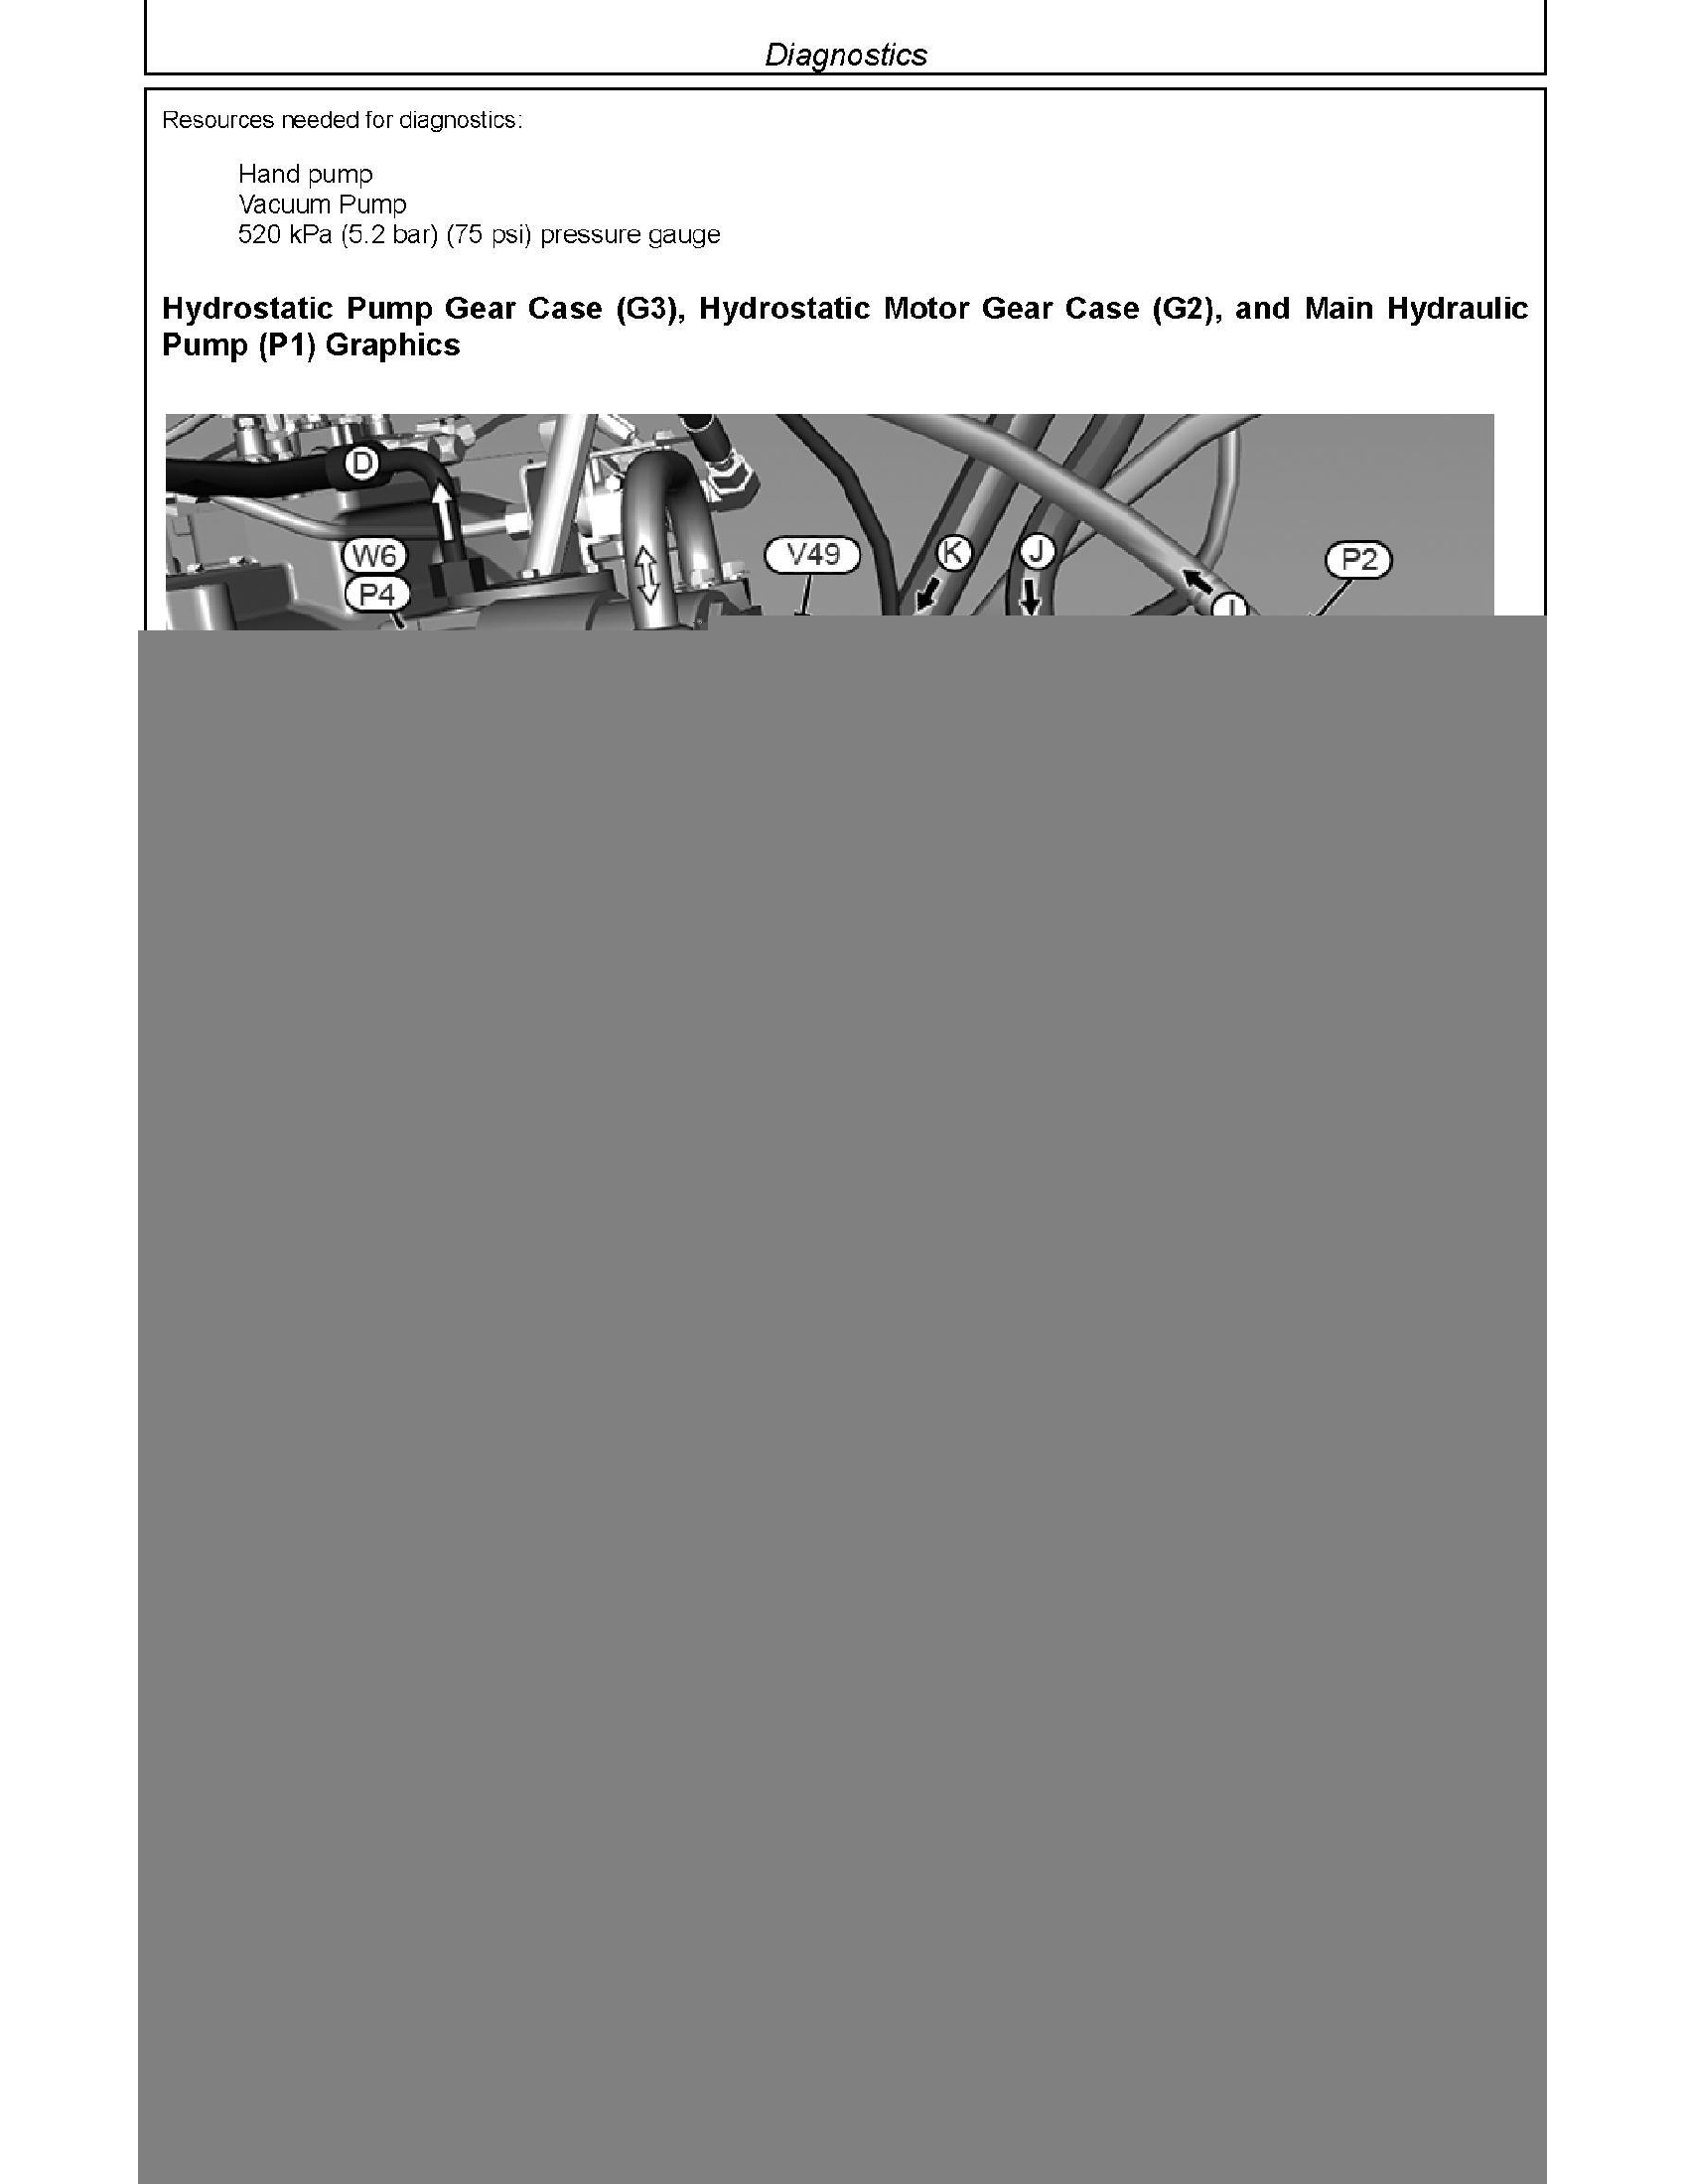 John Deere 437D manual pdf